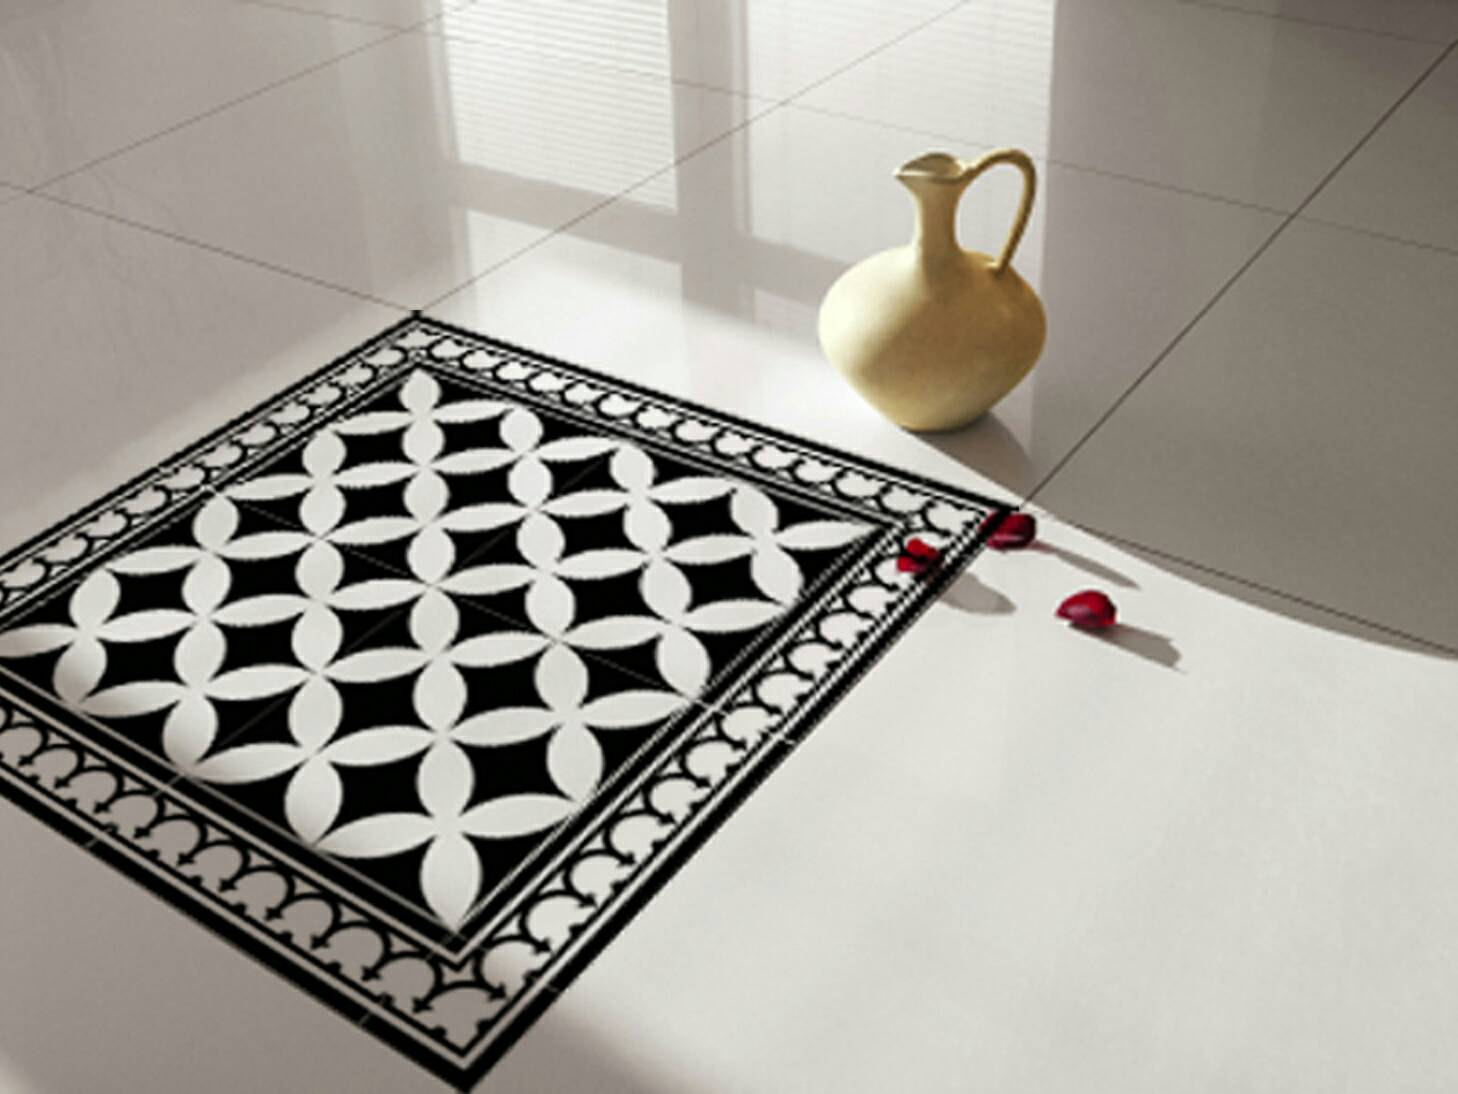 https://www.vanill.co/wp-content/uploads/2018/11/traditional-tiles-floor-tiles-floor-vinyl-tile-stickers-tile-decals-bathroom-tile-decal-kitchen-tile-decal-132-5bddd2dd.jpg